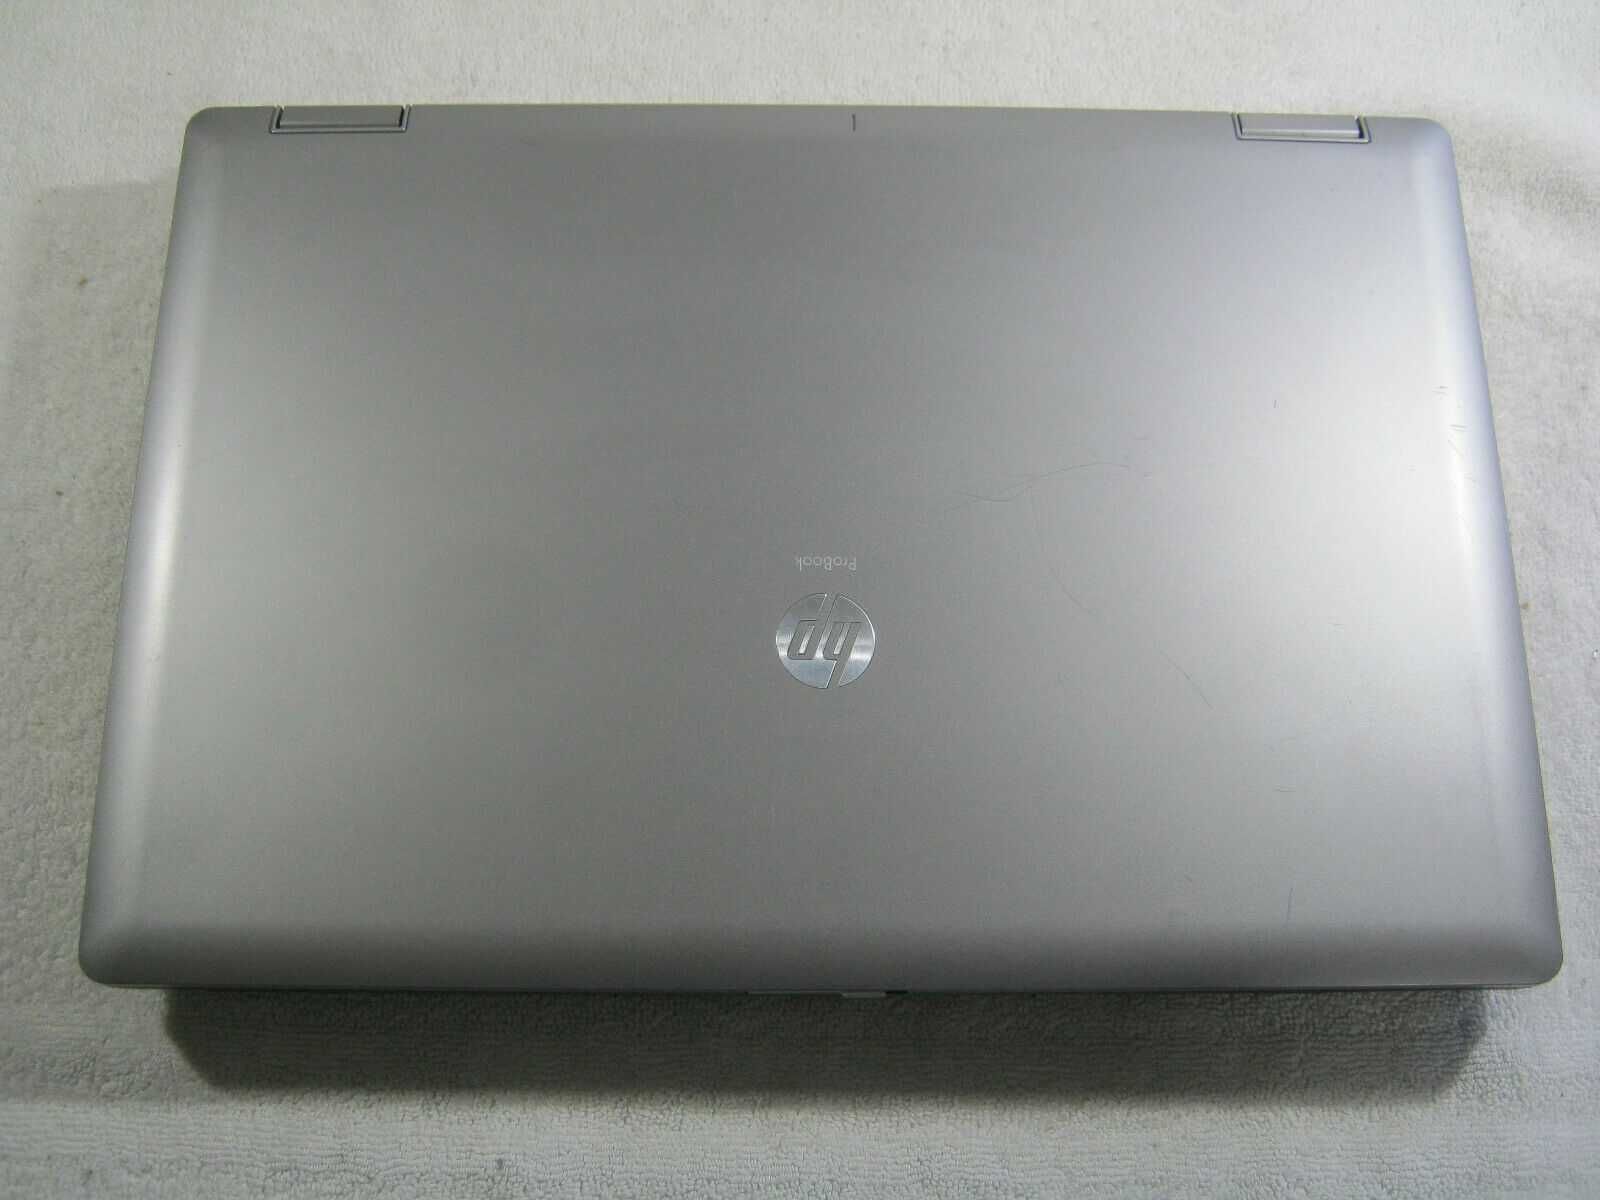 Лаптоп HP 6440B I3-350M 4GB 320GB HDD 14.0 HD Windows 10